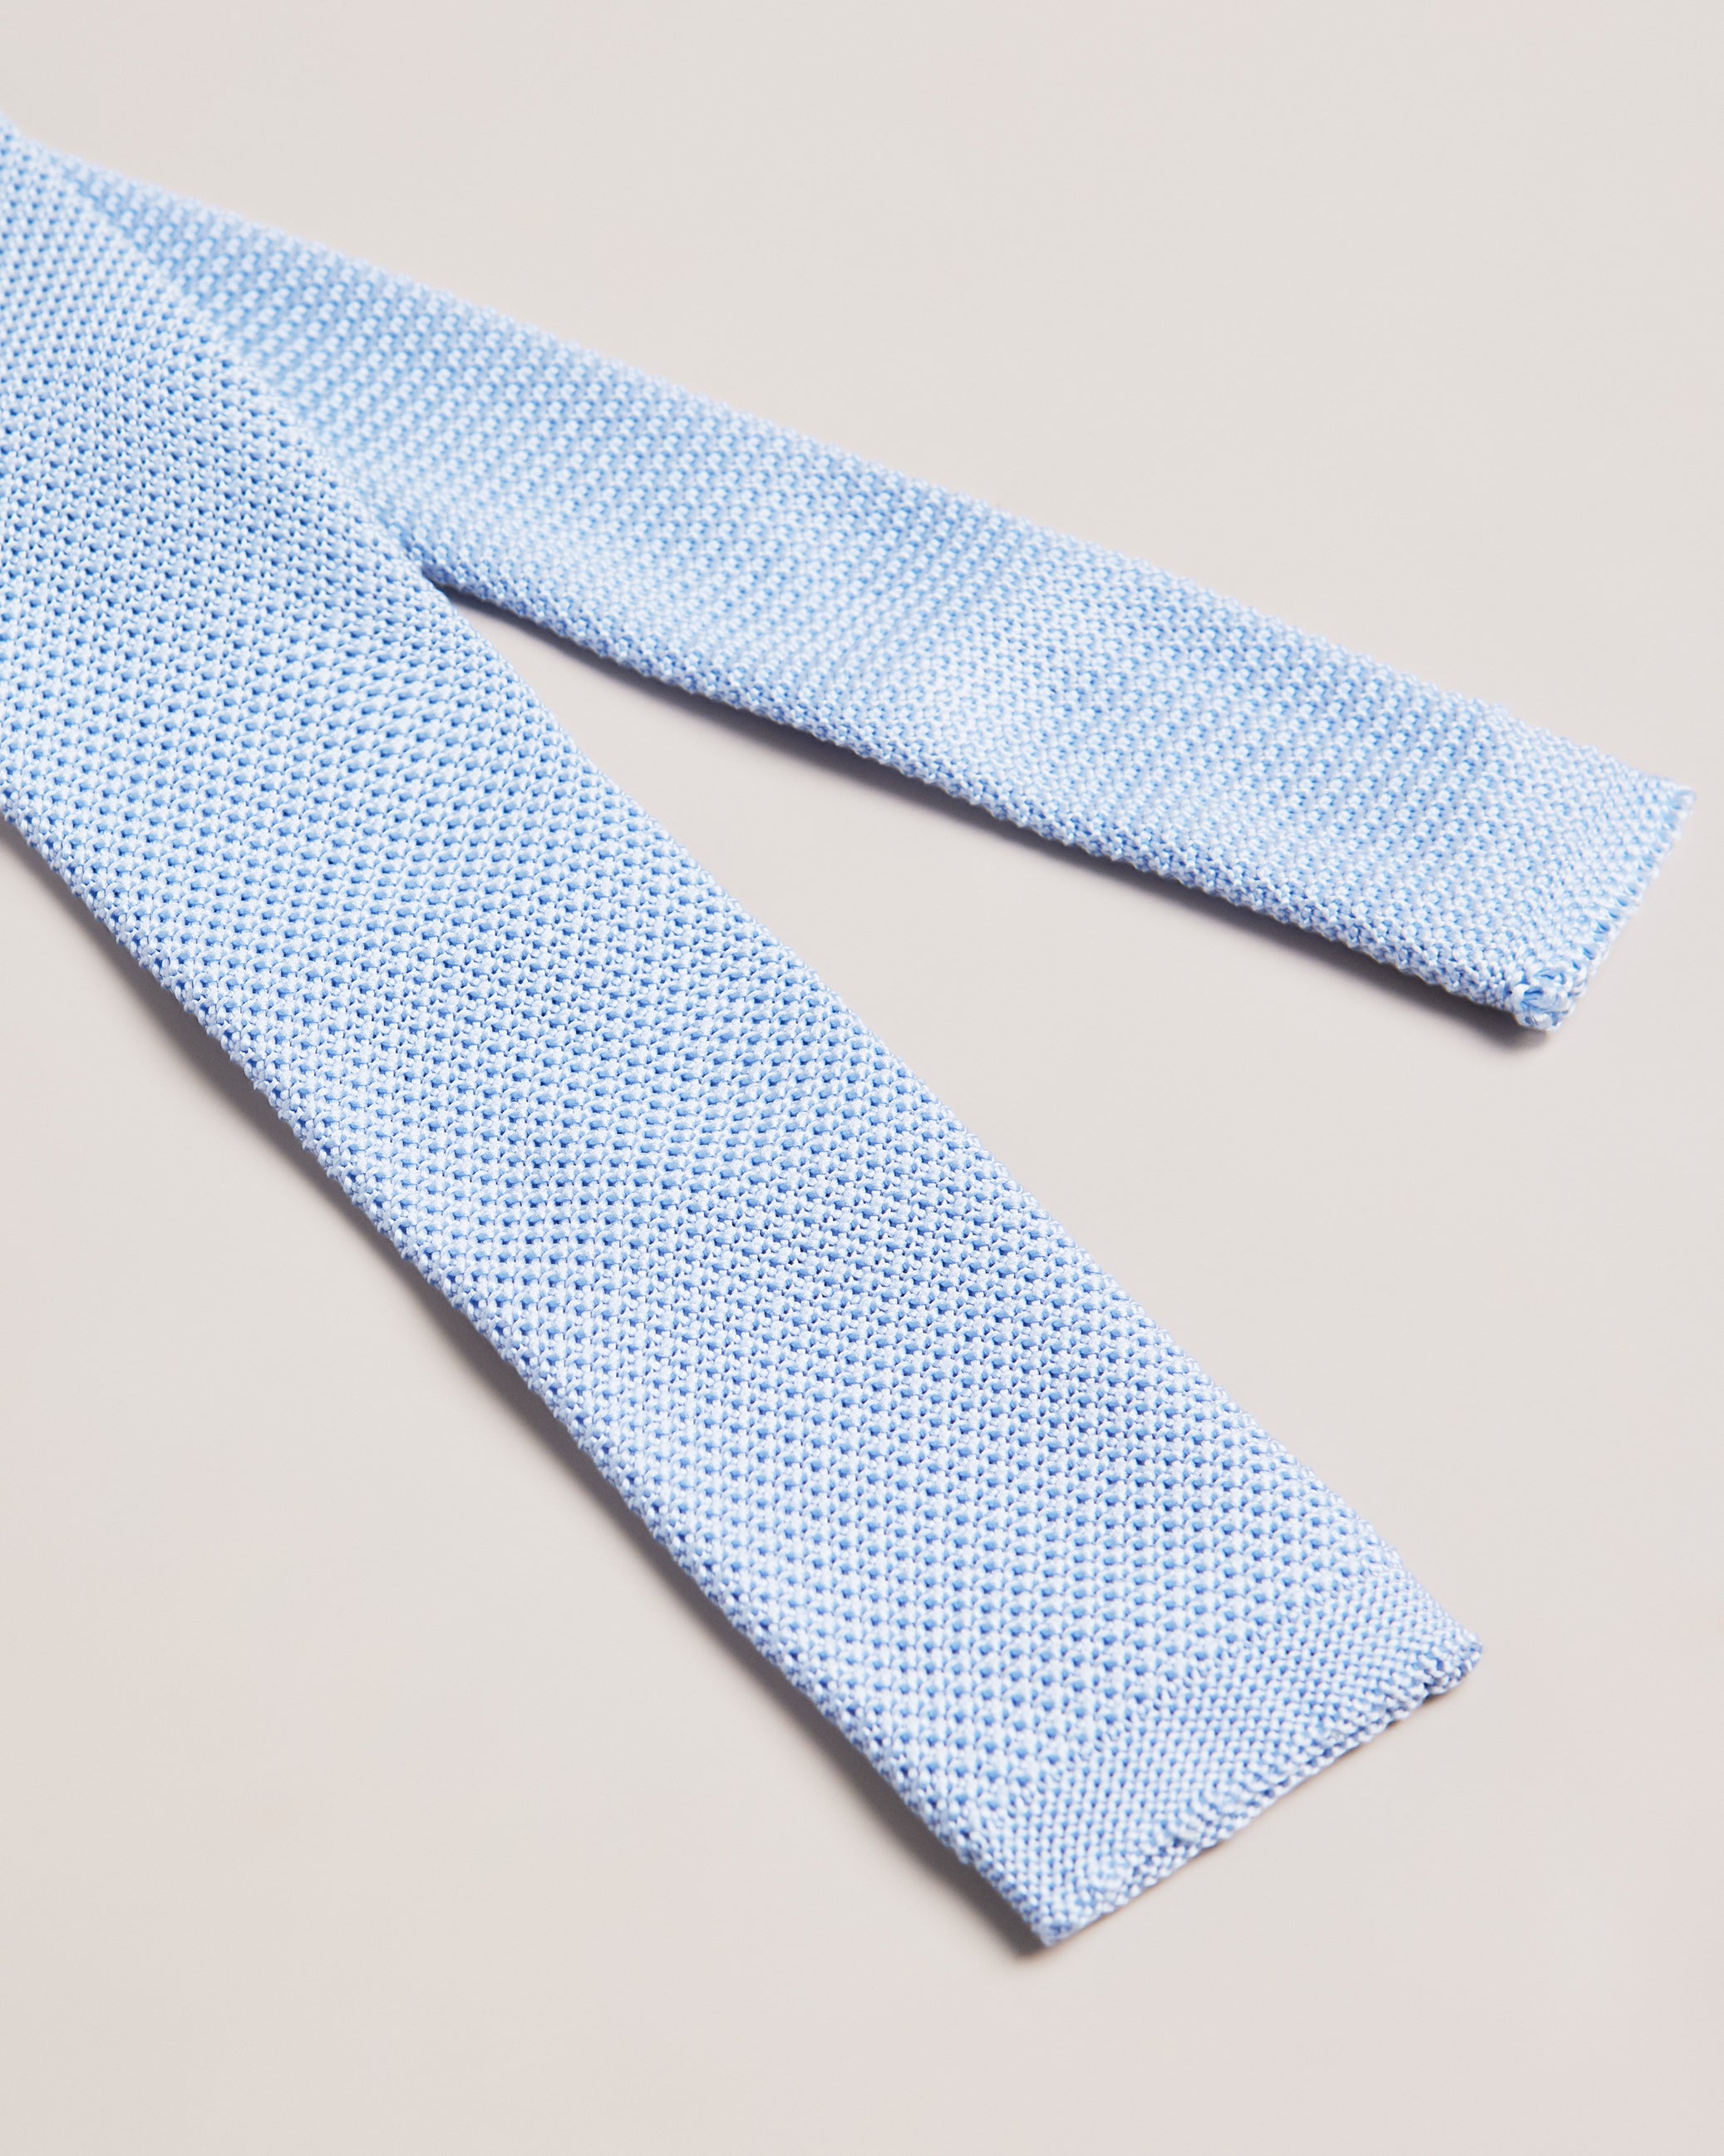 Kallino Knitted Tie Lt-Blue